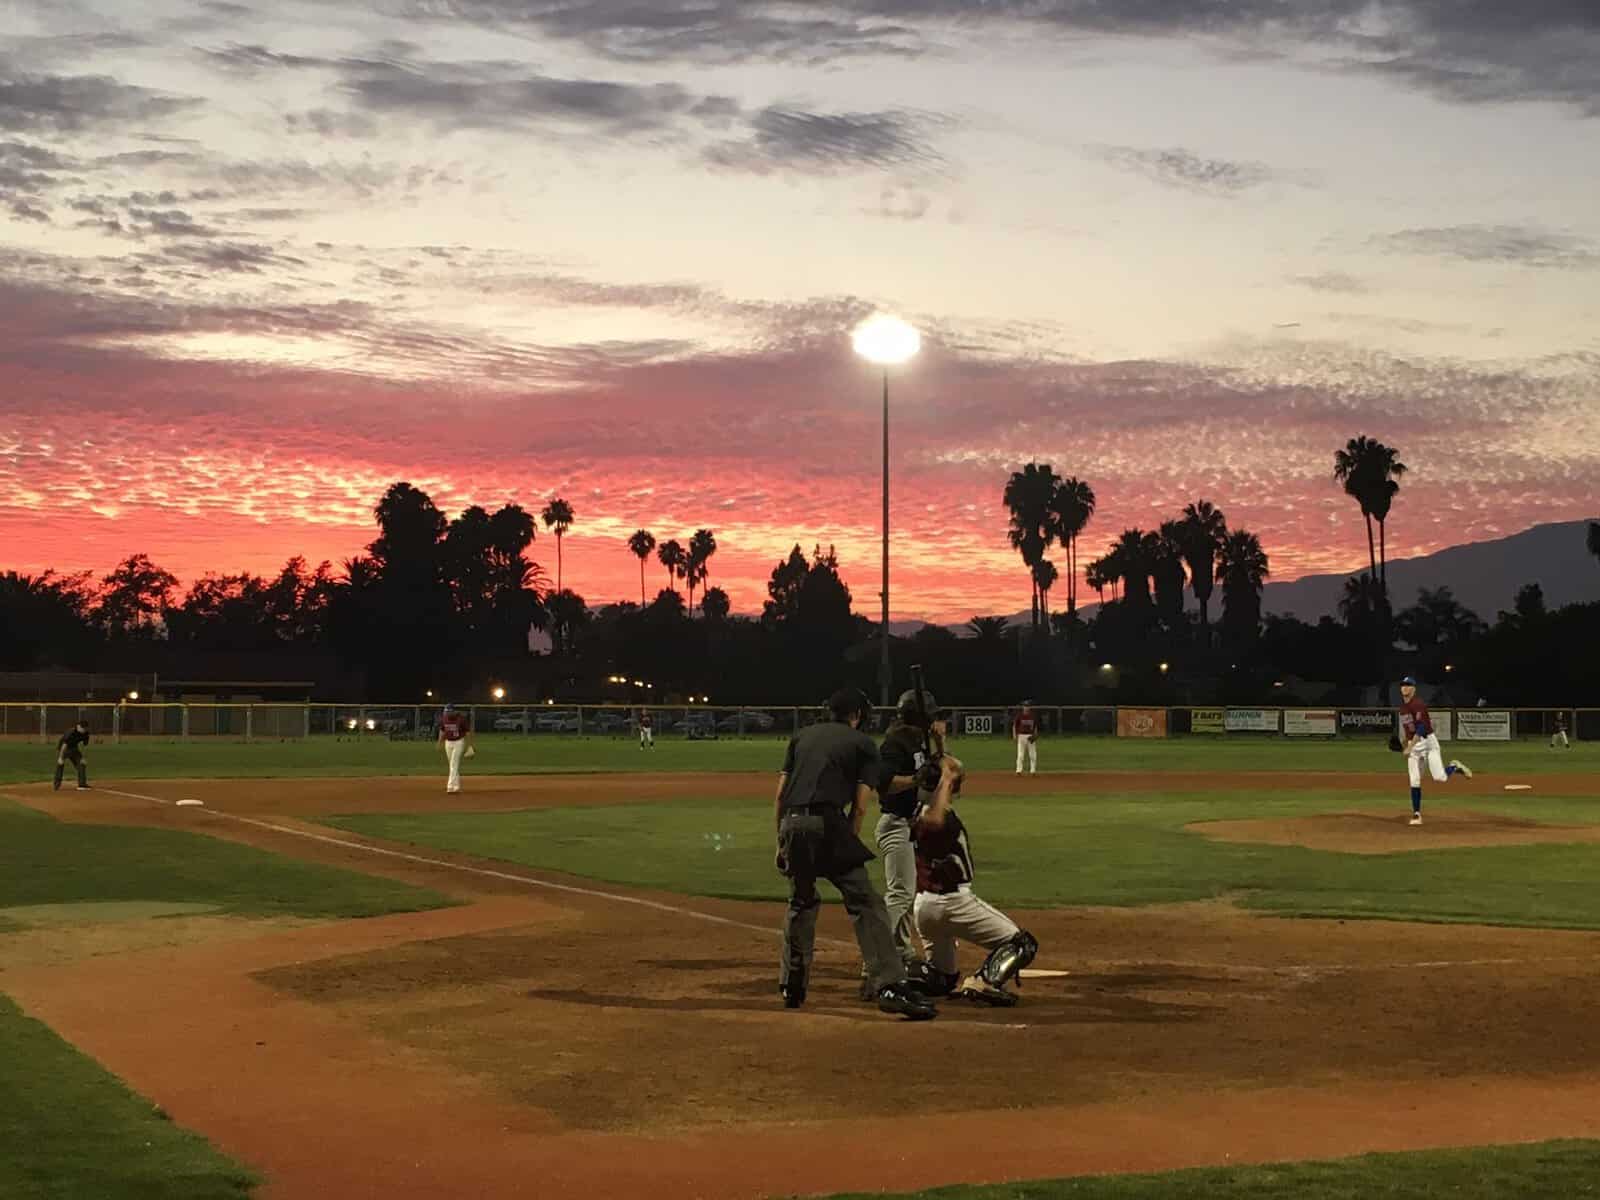 Baseball game at sunset